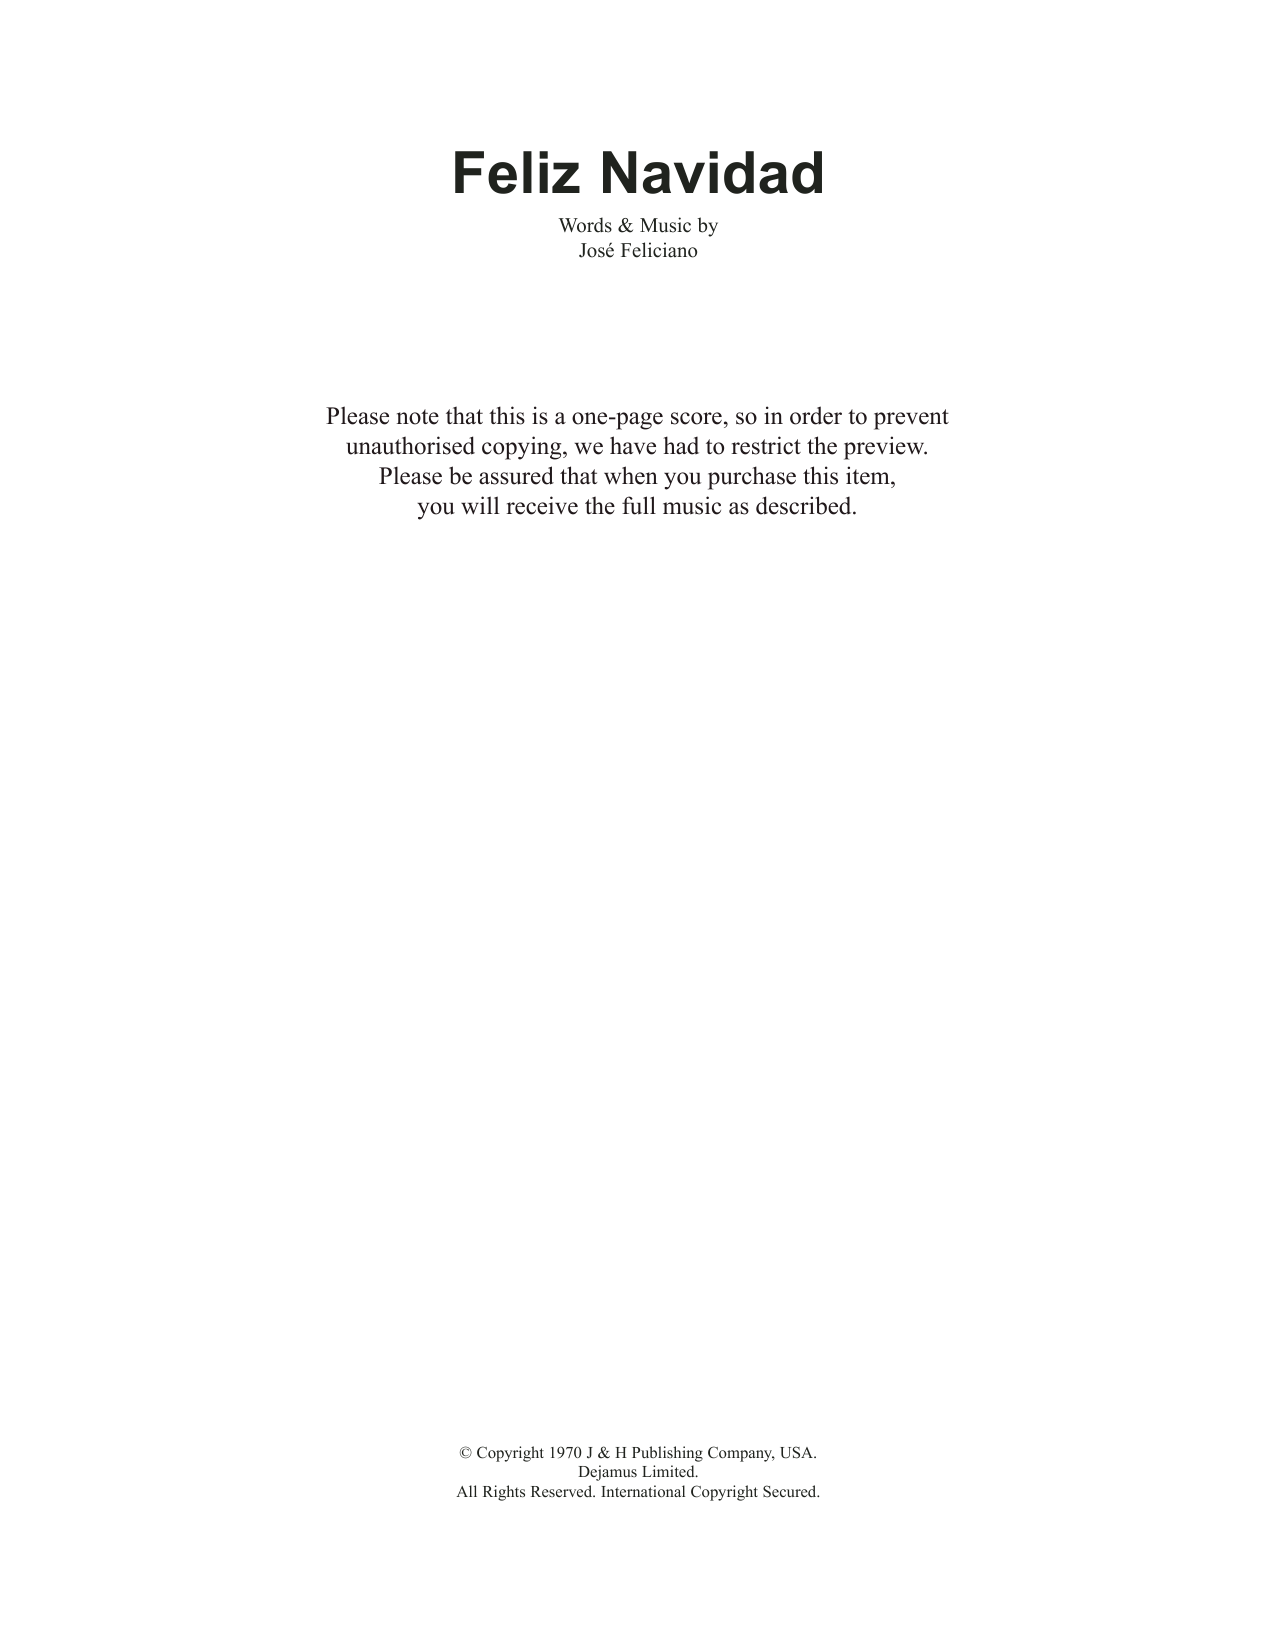 Jose Feliciano Feliz Navidad Sheet Music Notes & Chords for Piano Solo - Download or Print PDF